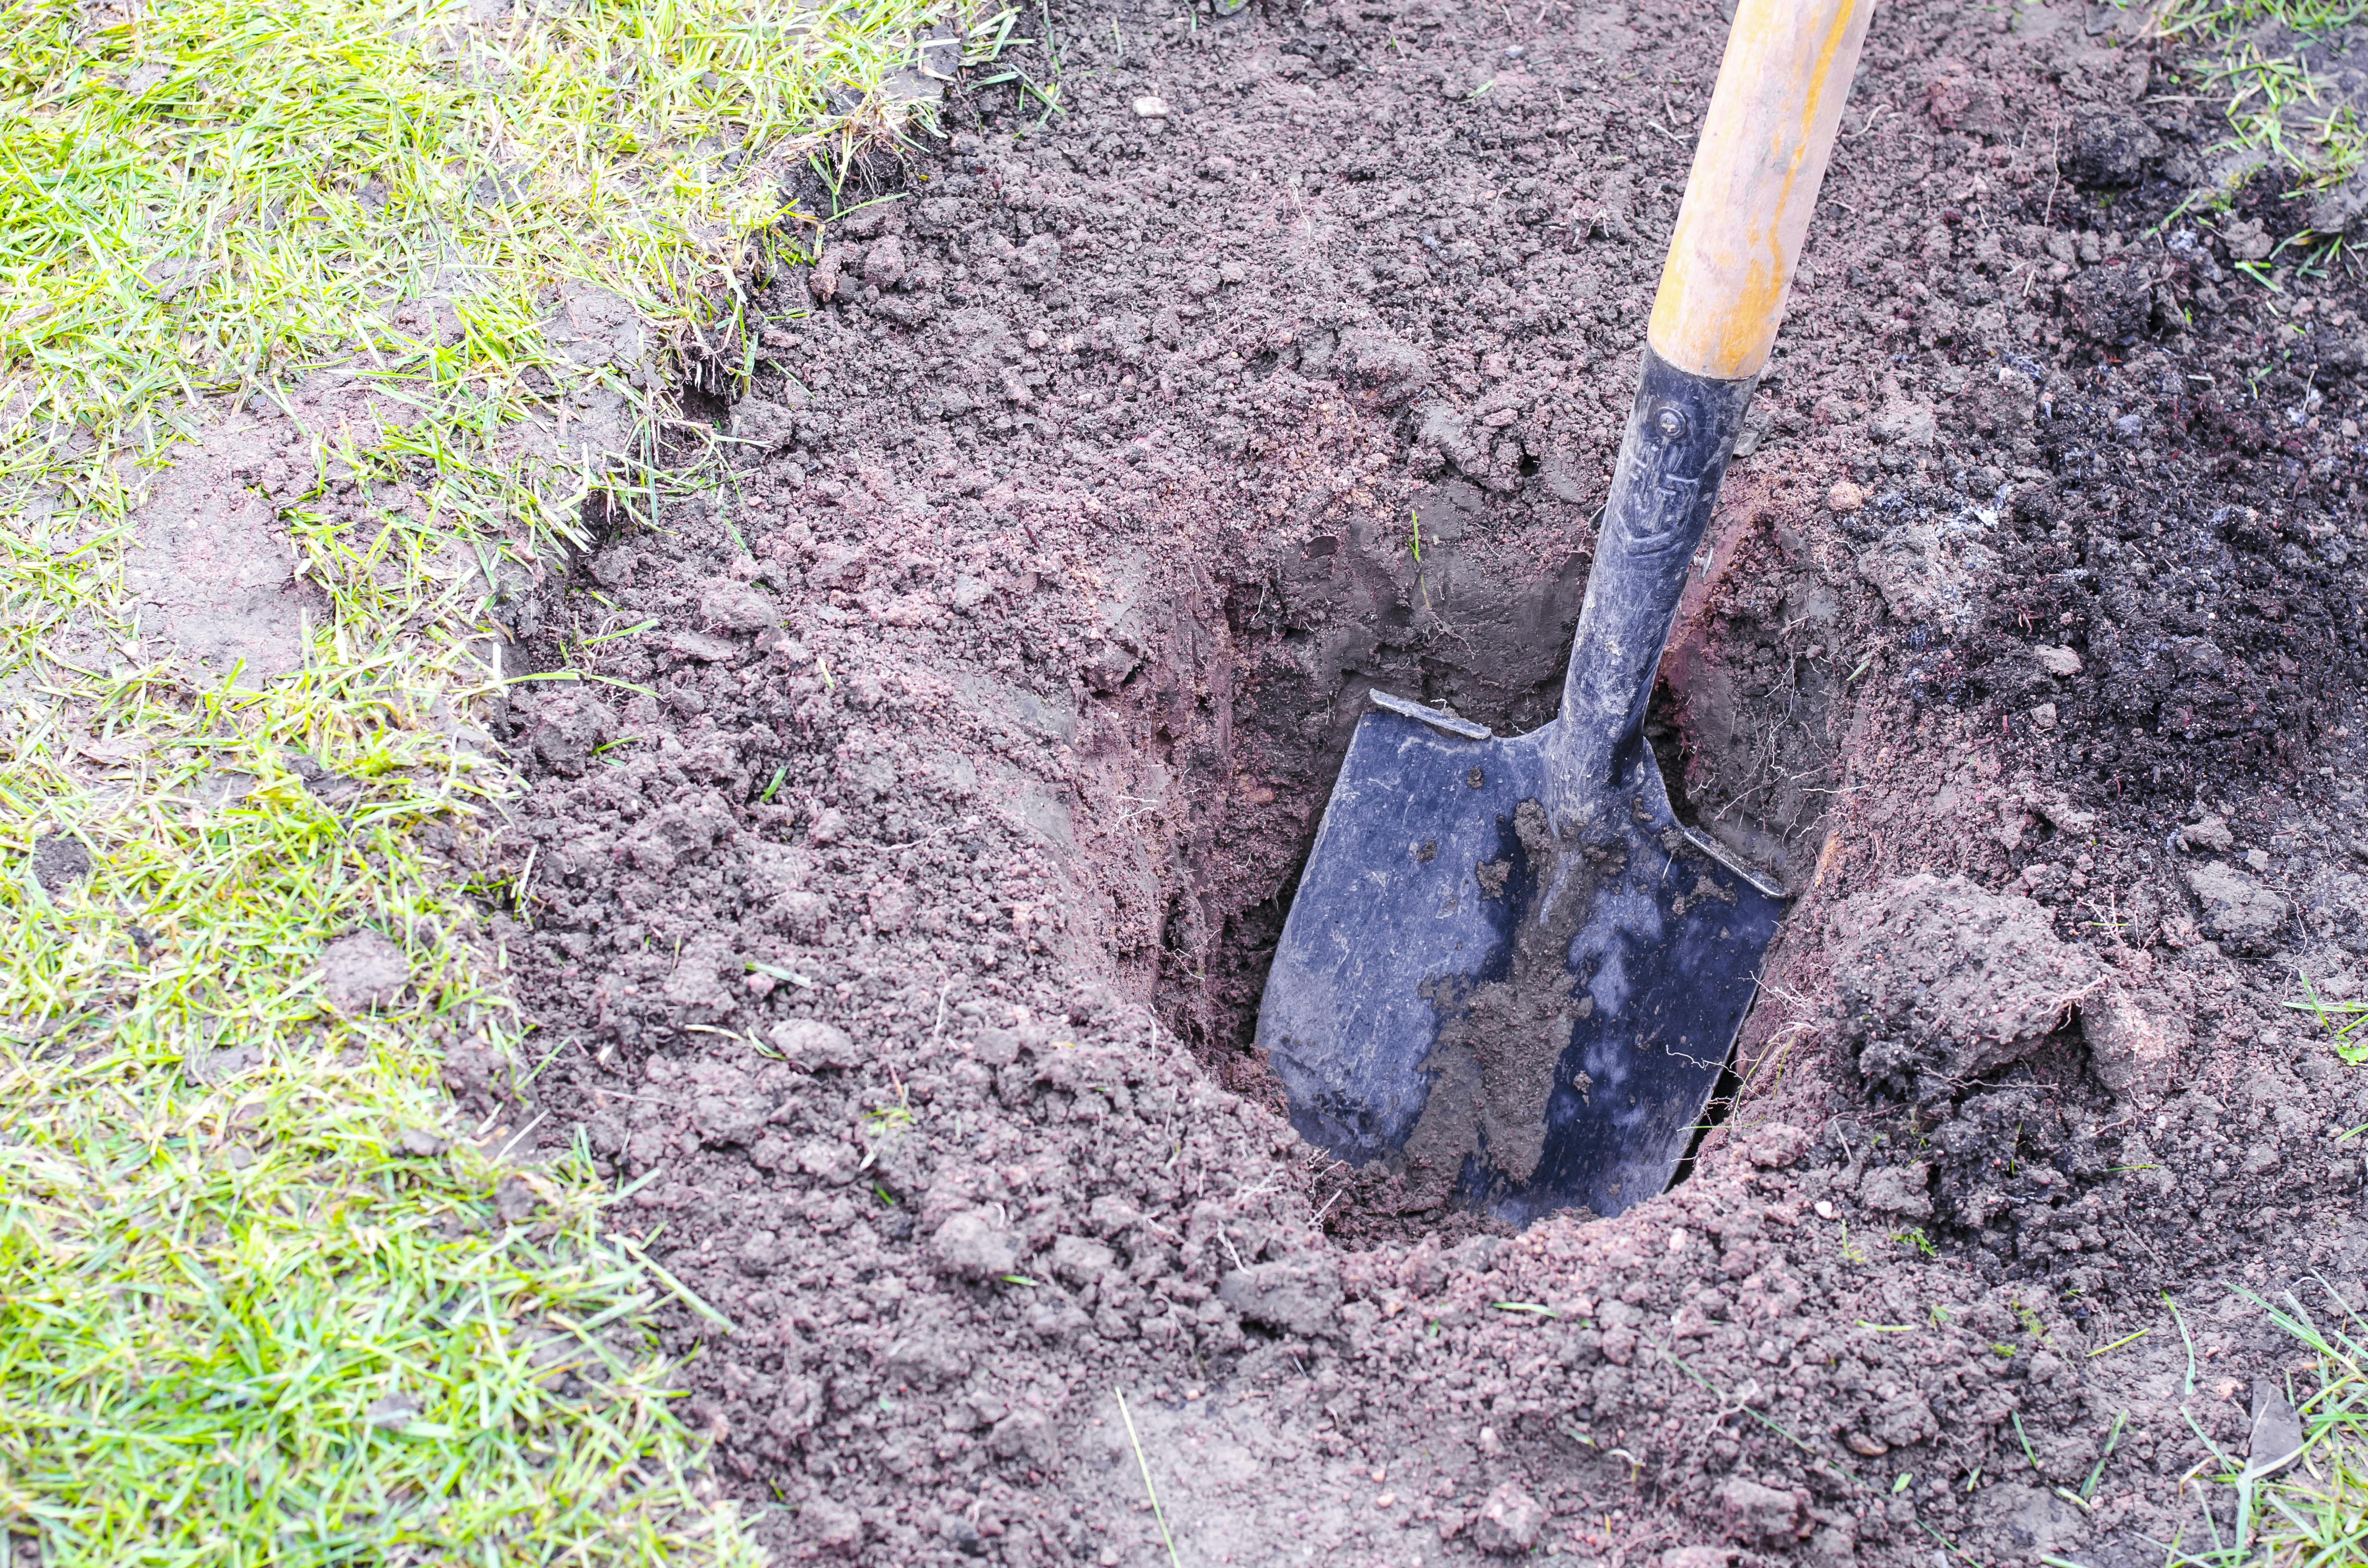 Graver et hul i jorden med en skovl